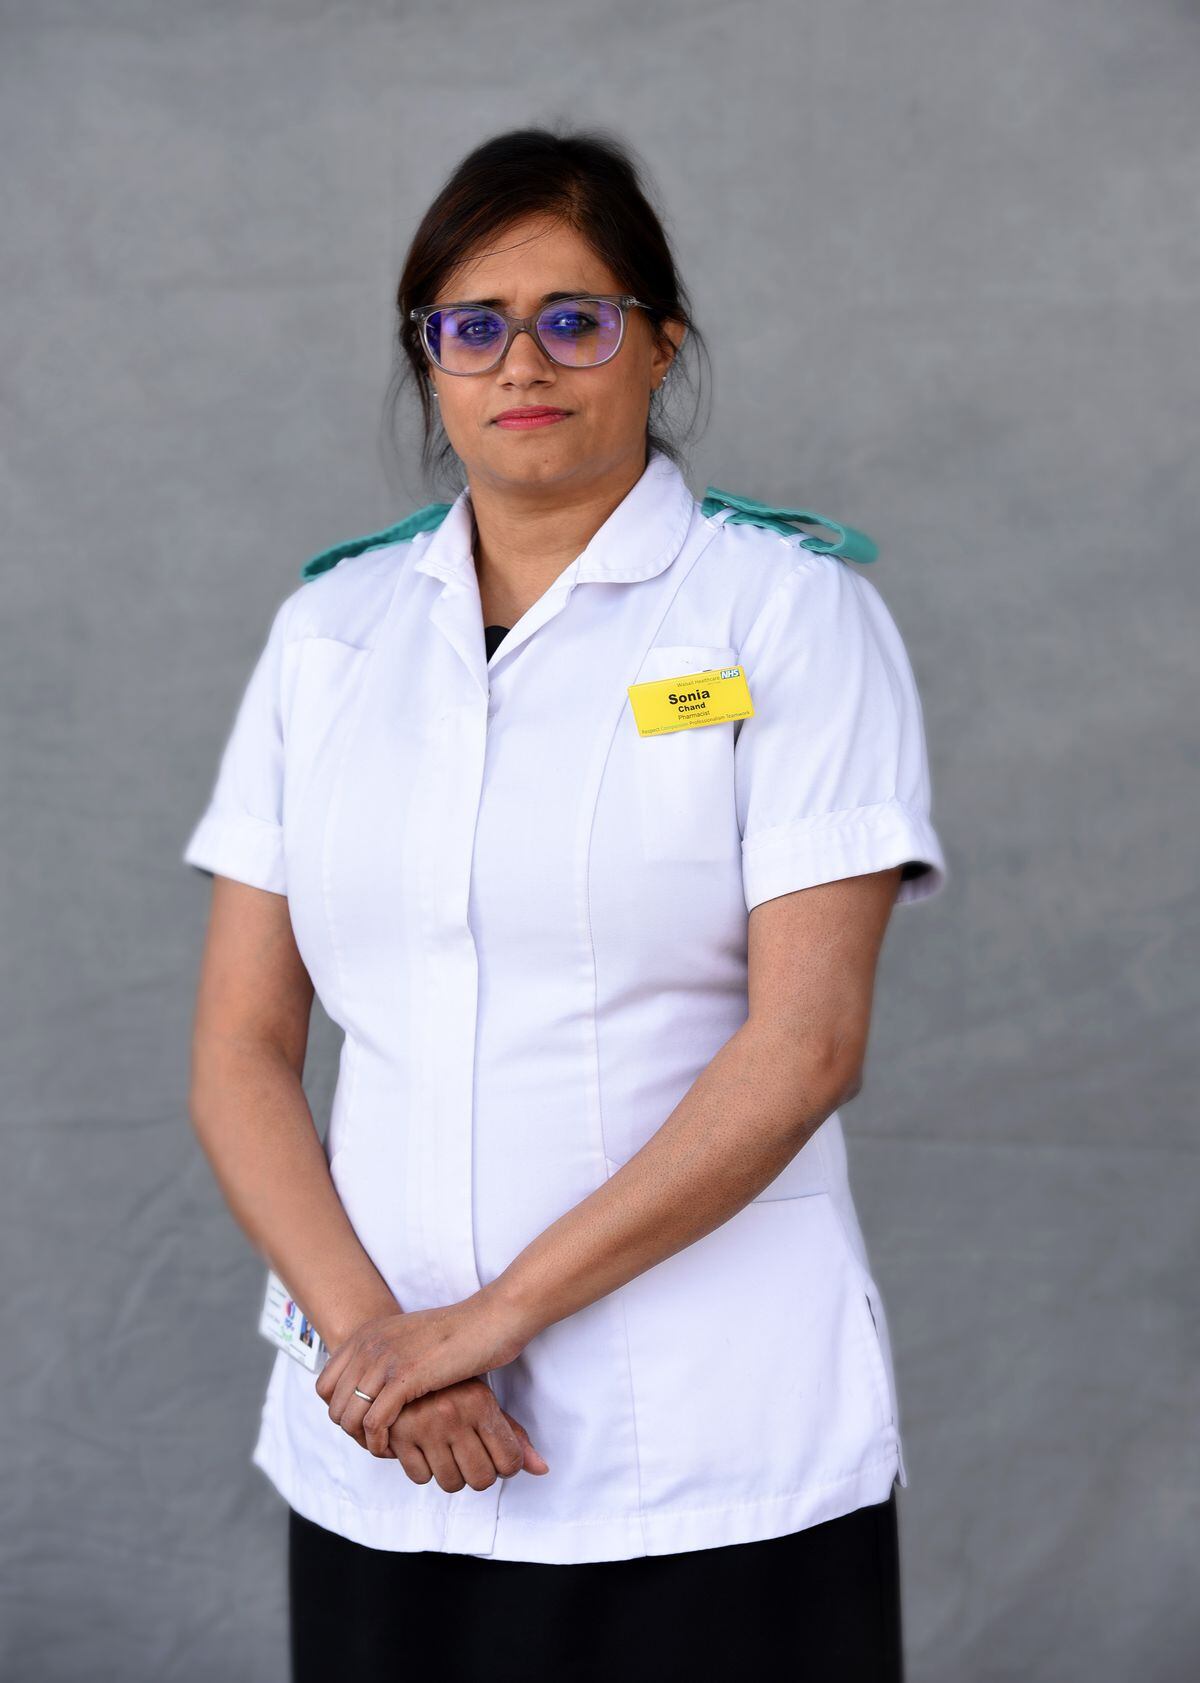 Deputy director of pharmacy Sonia Chand